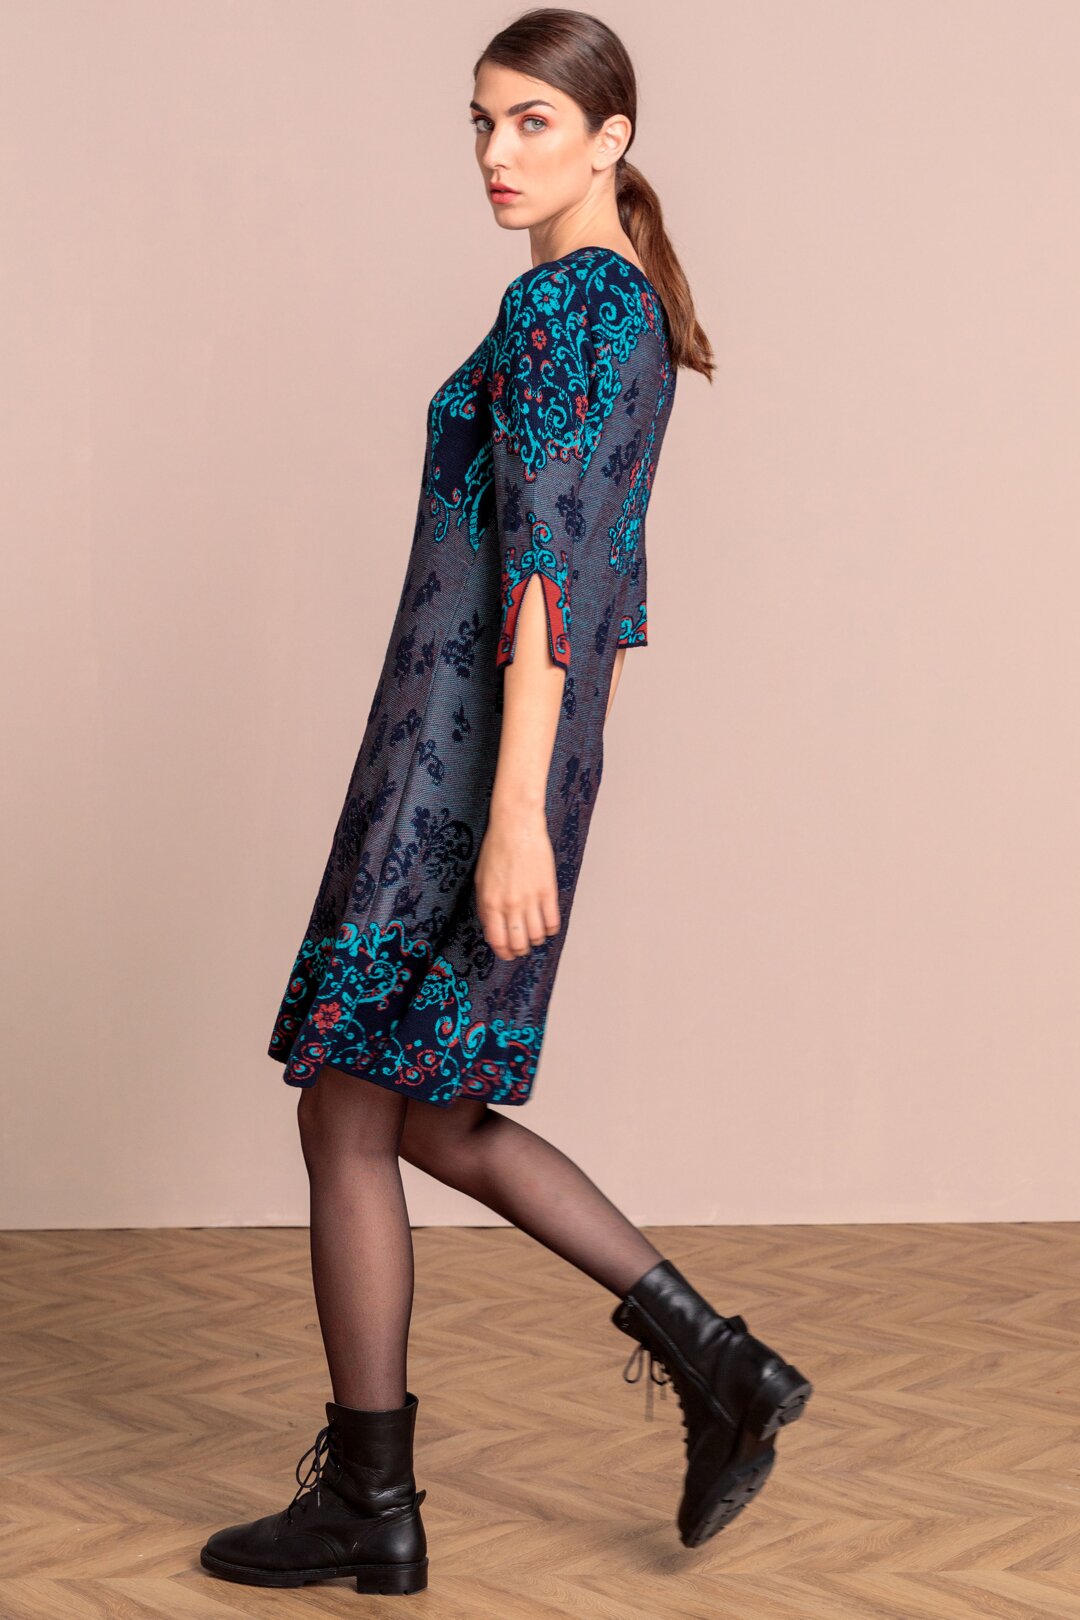 Dress, Brocade Pattern